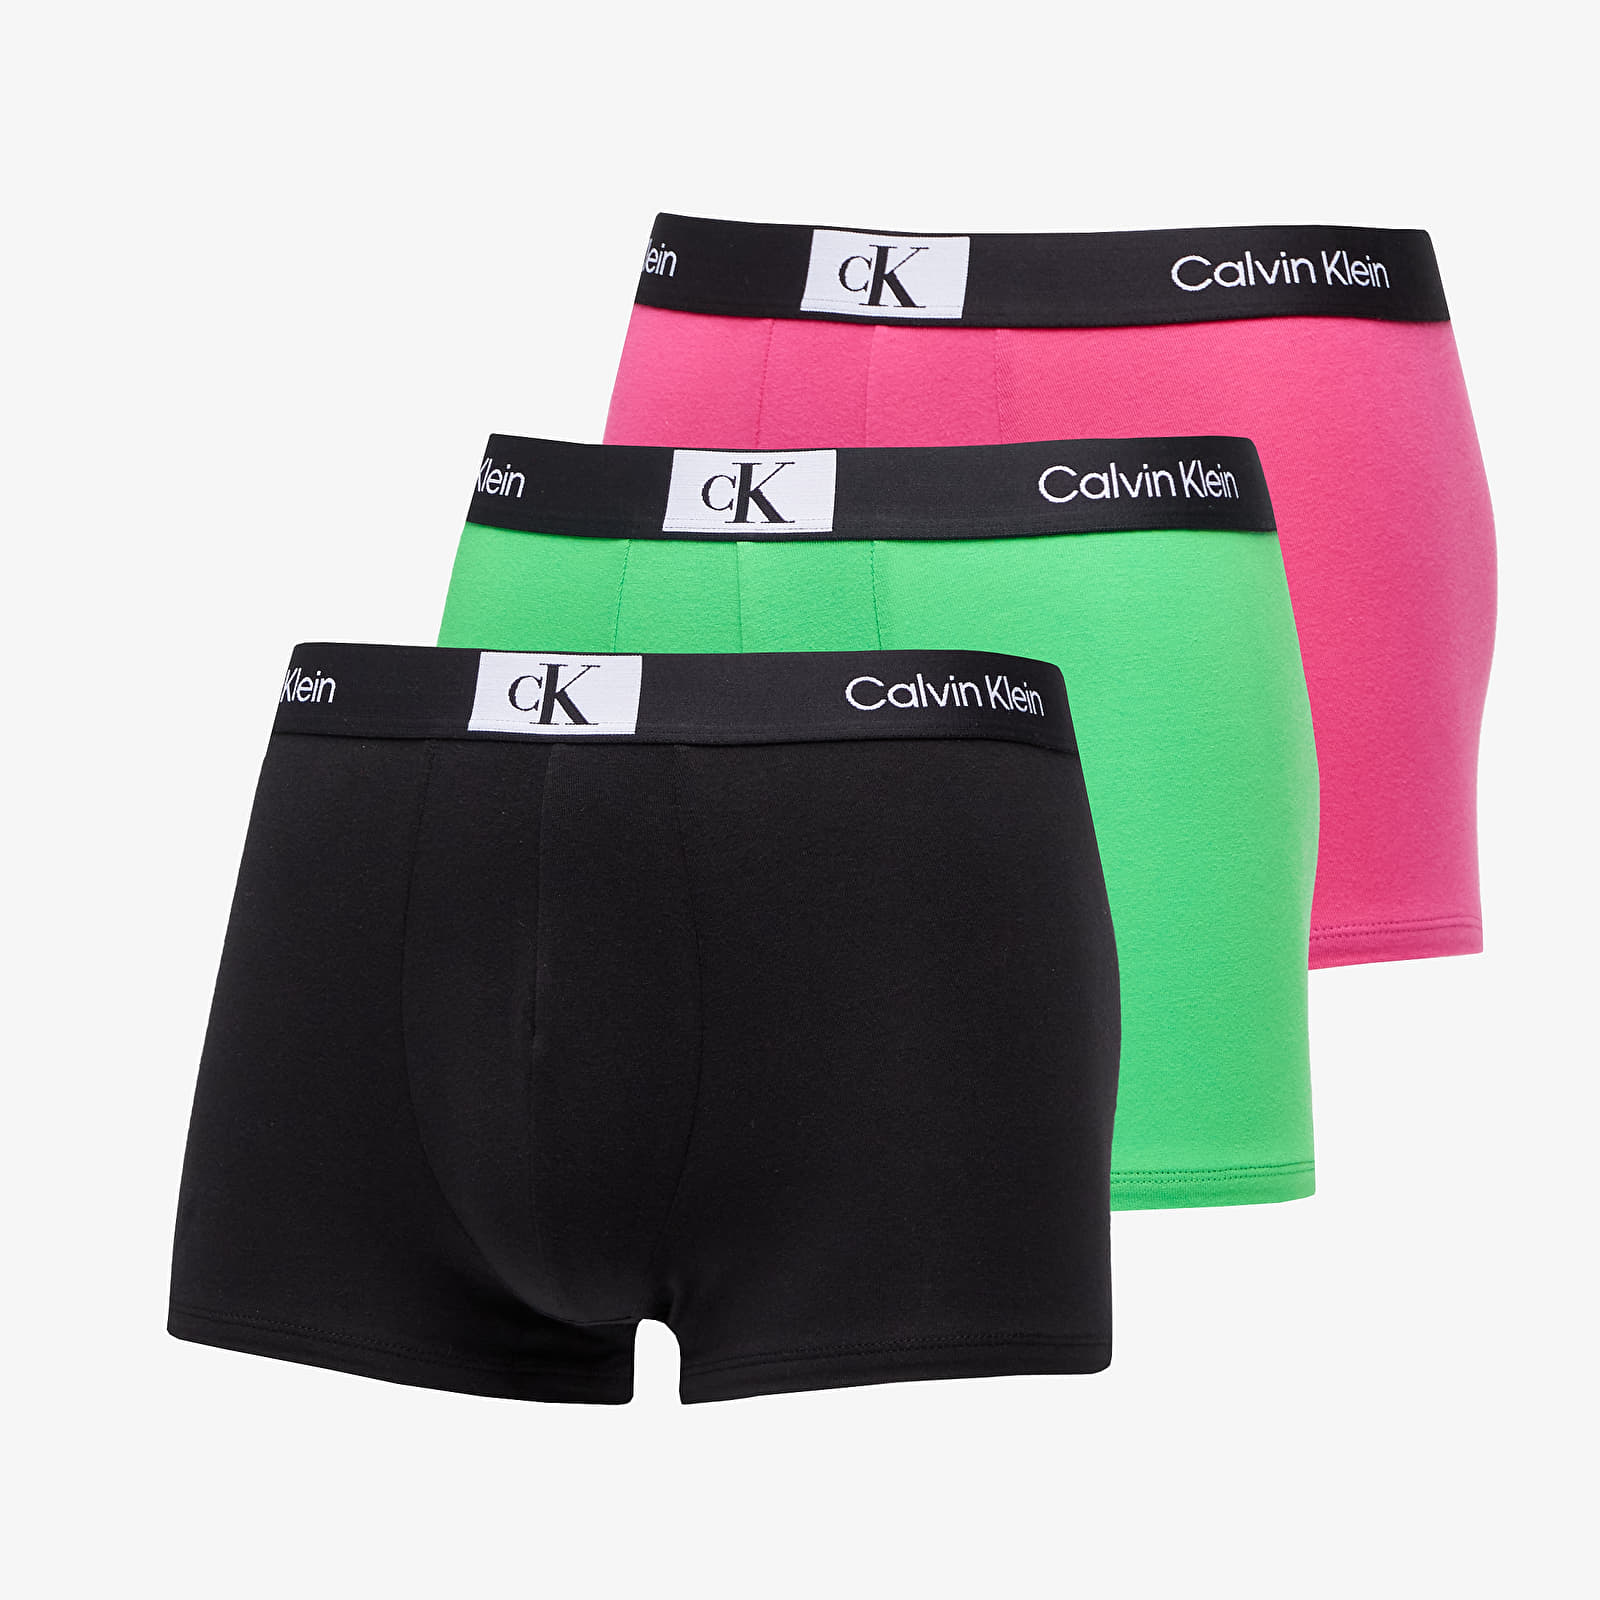 Boxer shorts Calvin Klein 96 Cotton Stretch Trunk 3-Pack Island Green/ Black/ Fuschia Rose